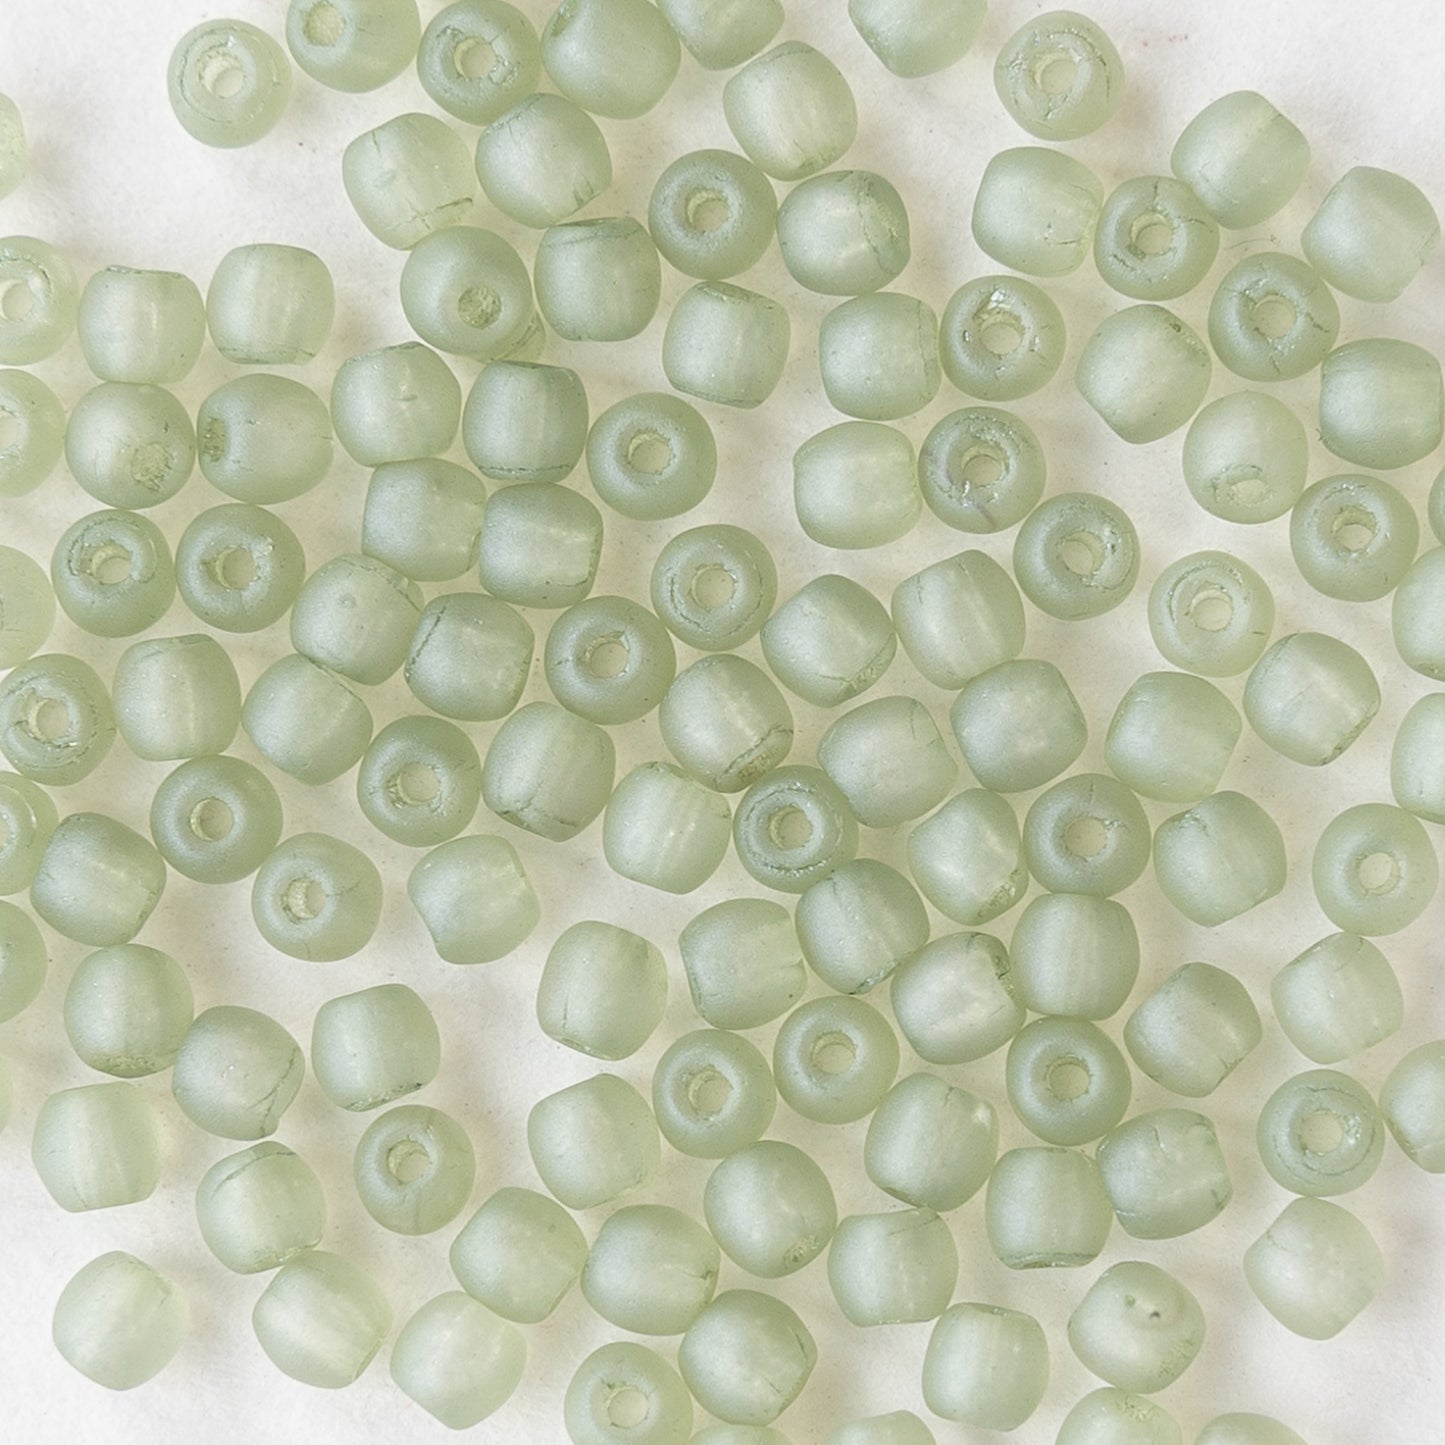 3mm Round Glass Beads - Celadon Green - 120 Beads